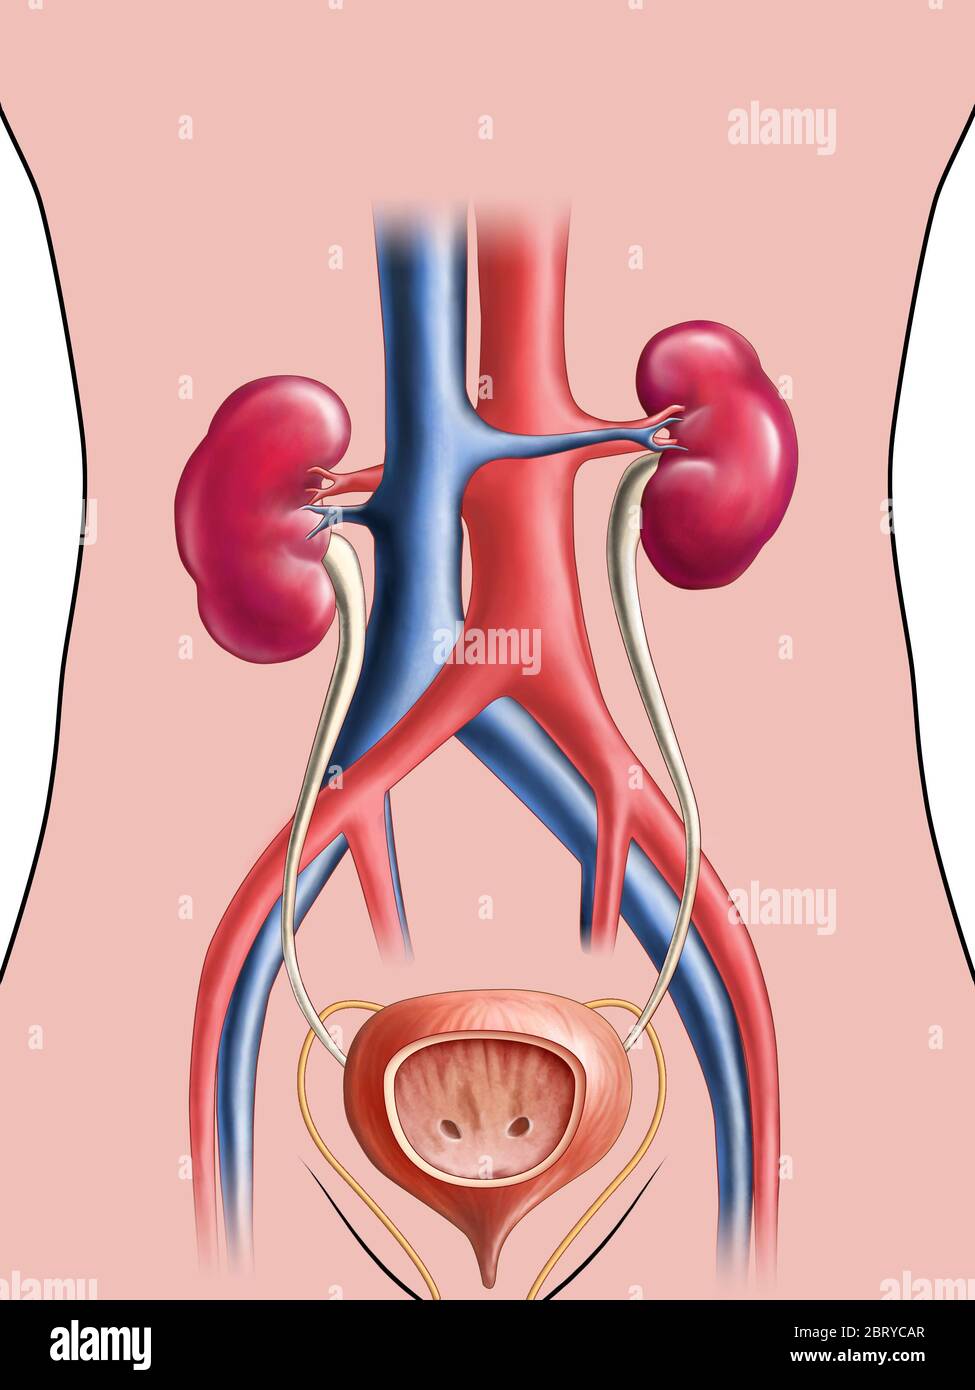 Anatomical drawing of the urinary sistem. Digital illustration. Stock Photo